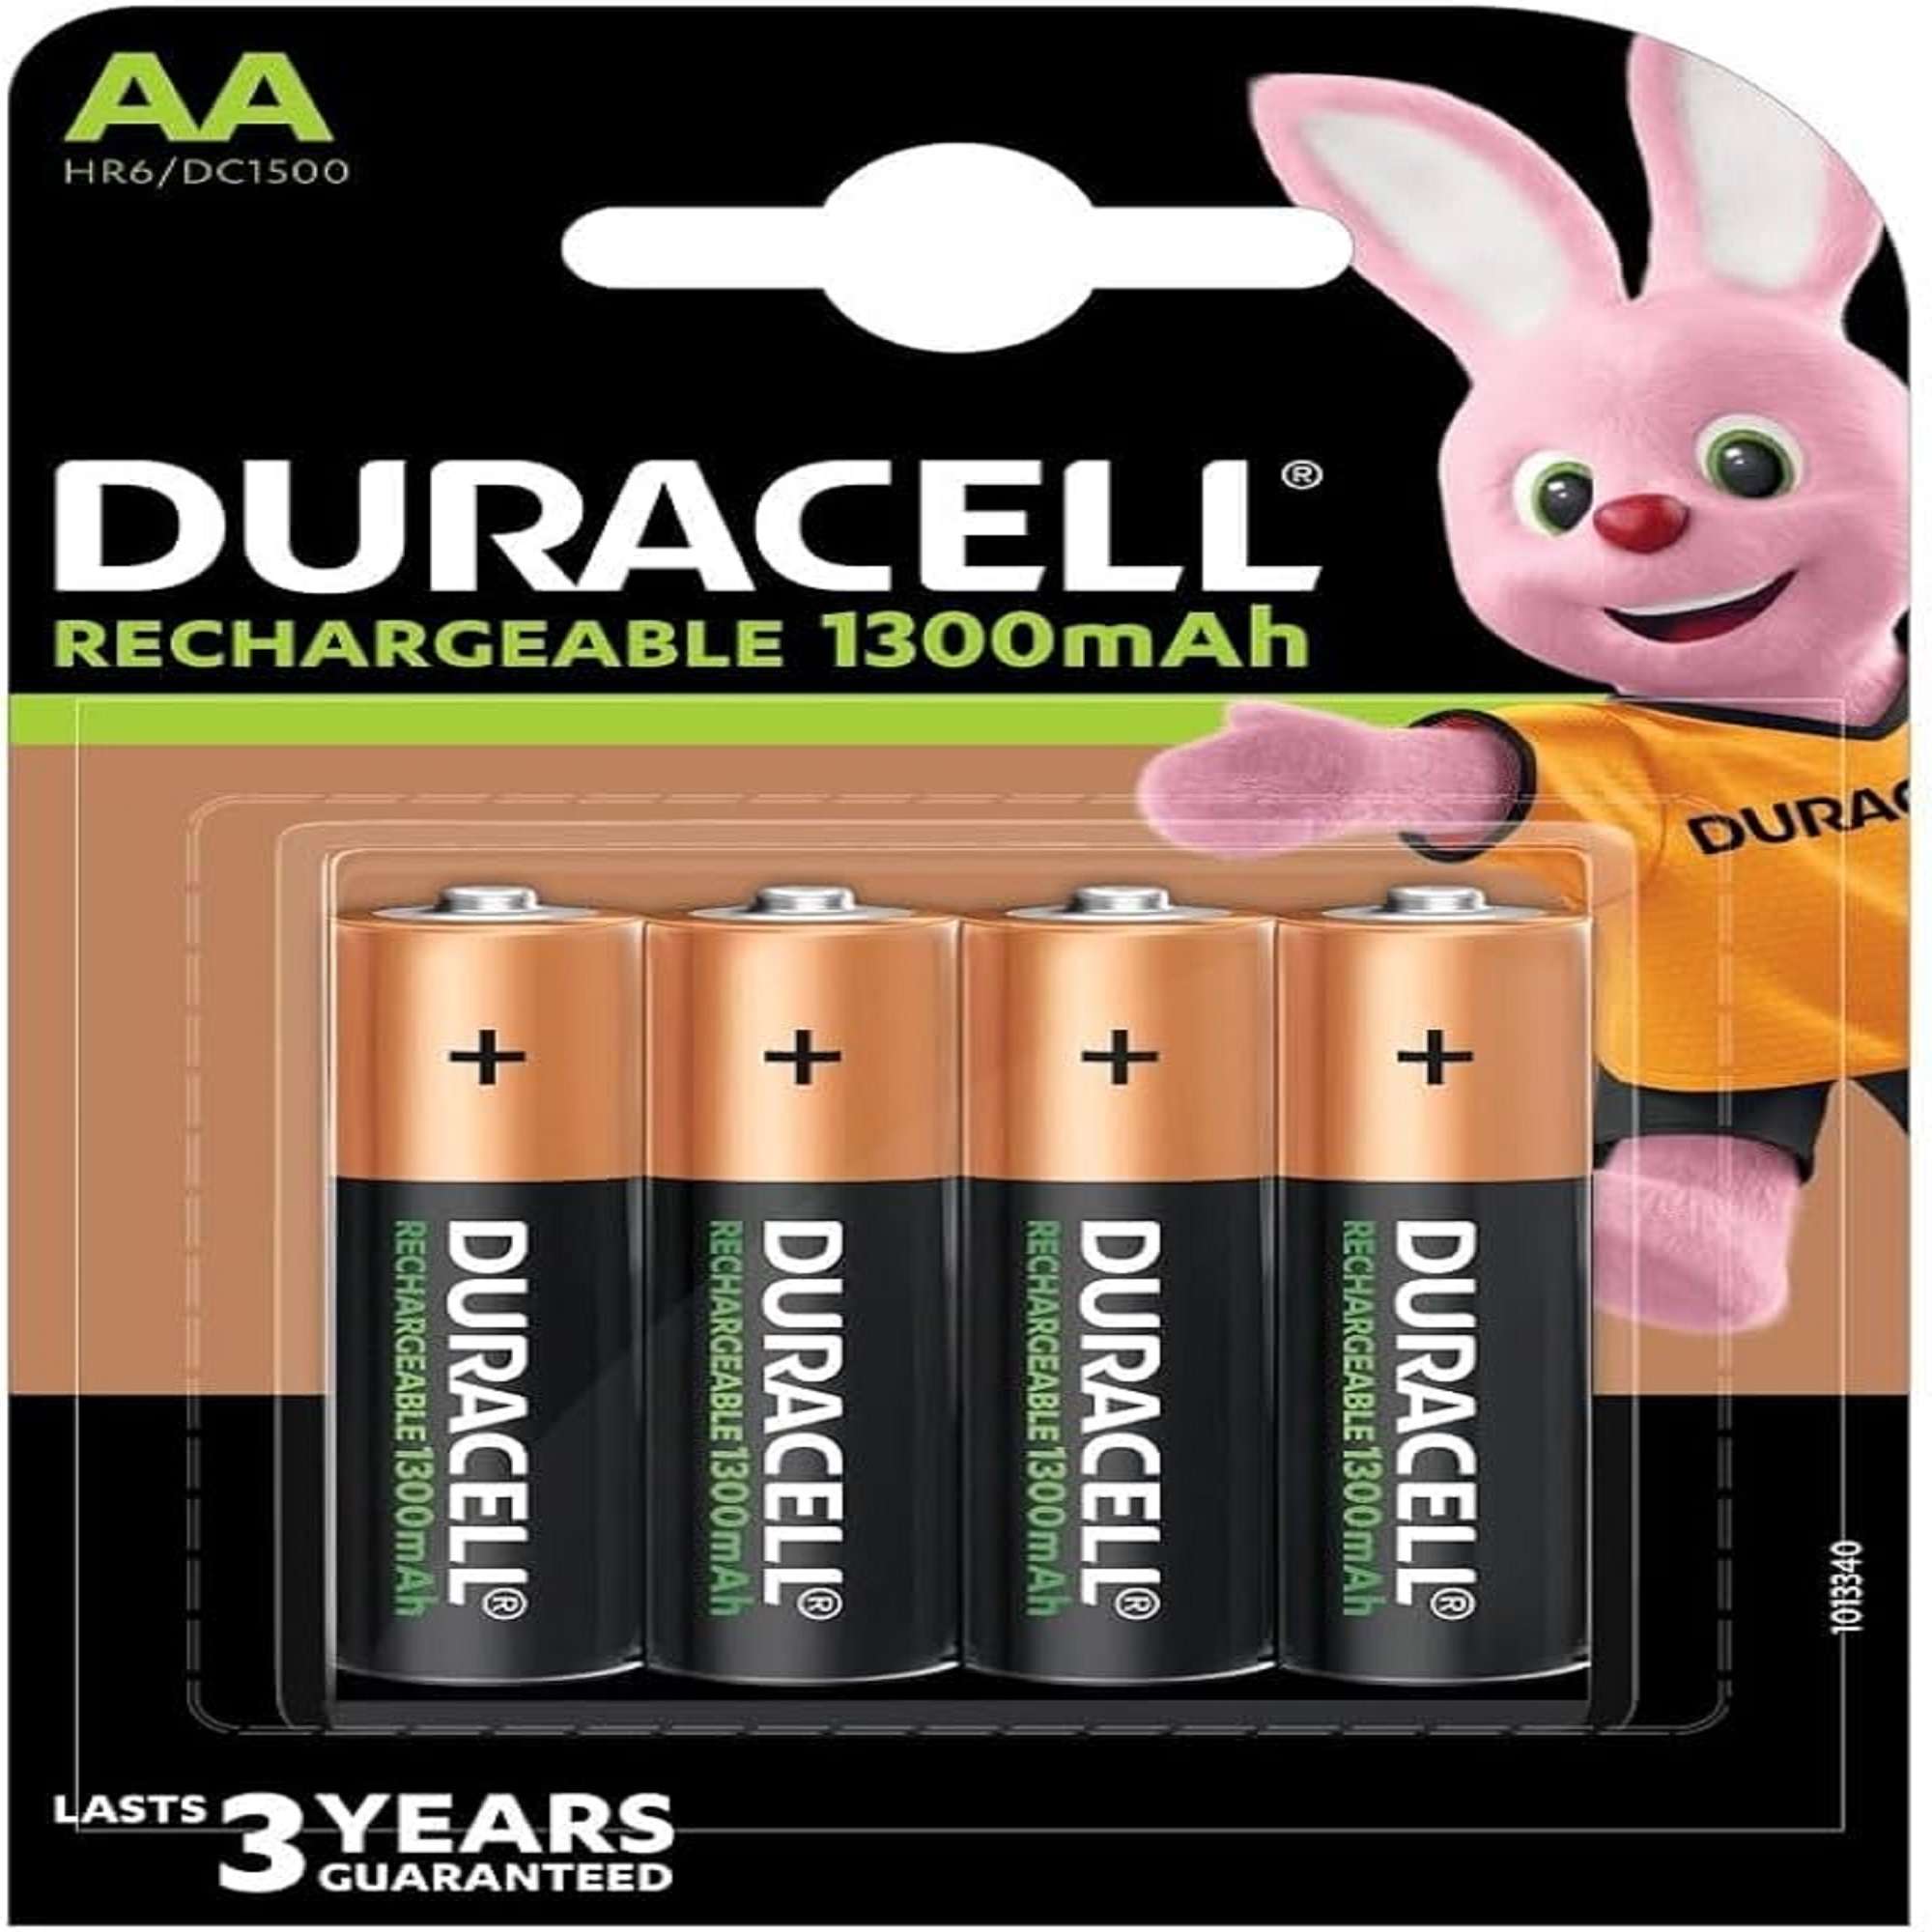 Batterie stilo ricaricabili, blister con 4 pile - DURACELL AA 4